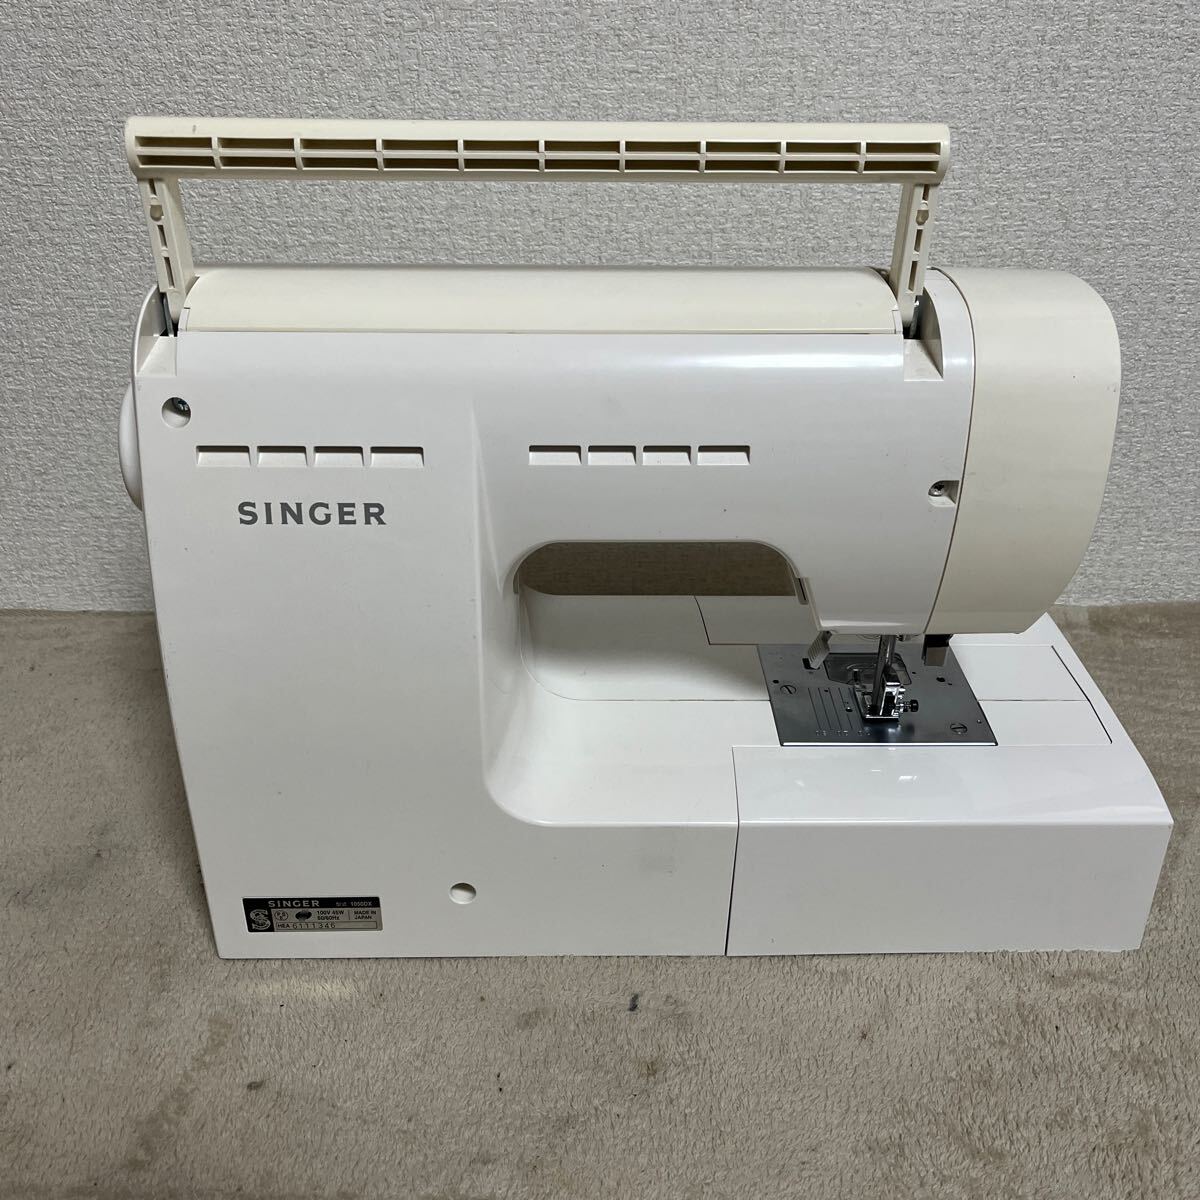 (M)SINGER певец компьютер швейная машина 1050DX Rill Deluxe швейная машина рукоделие 